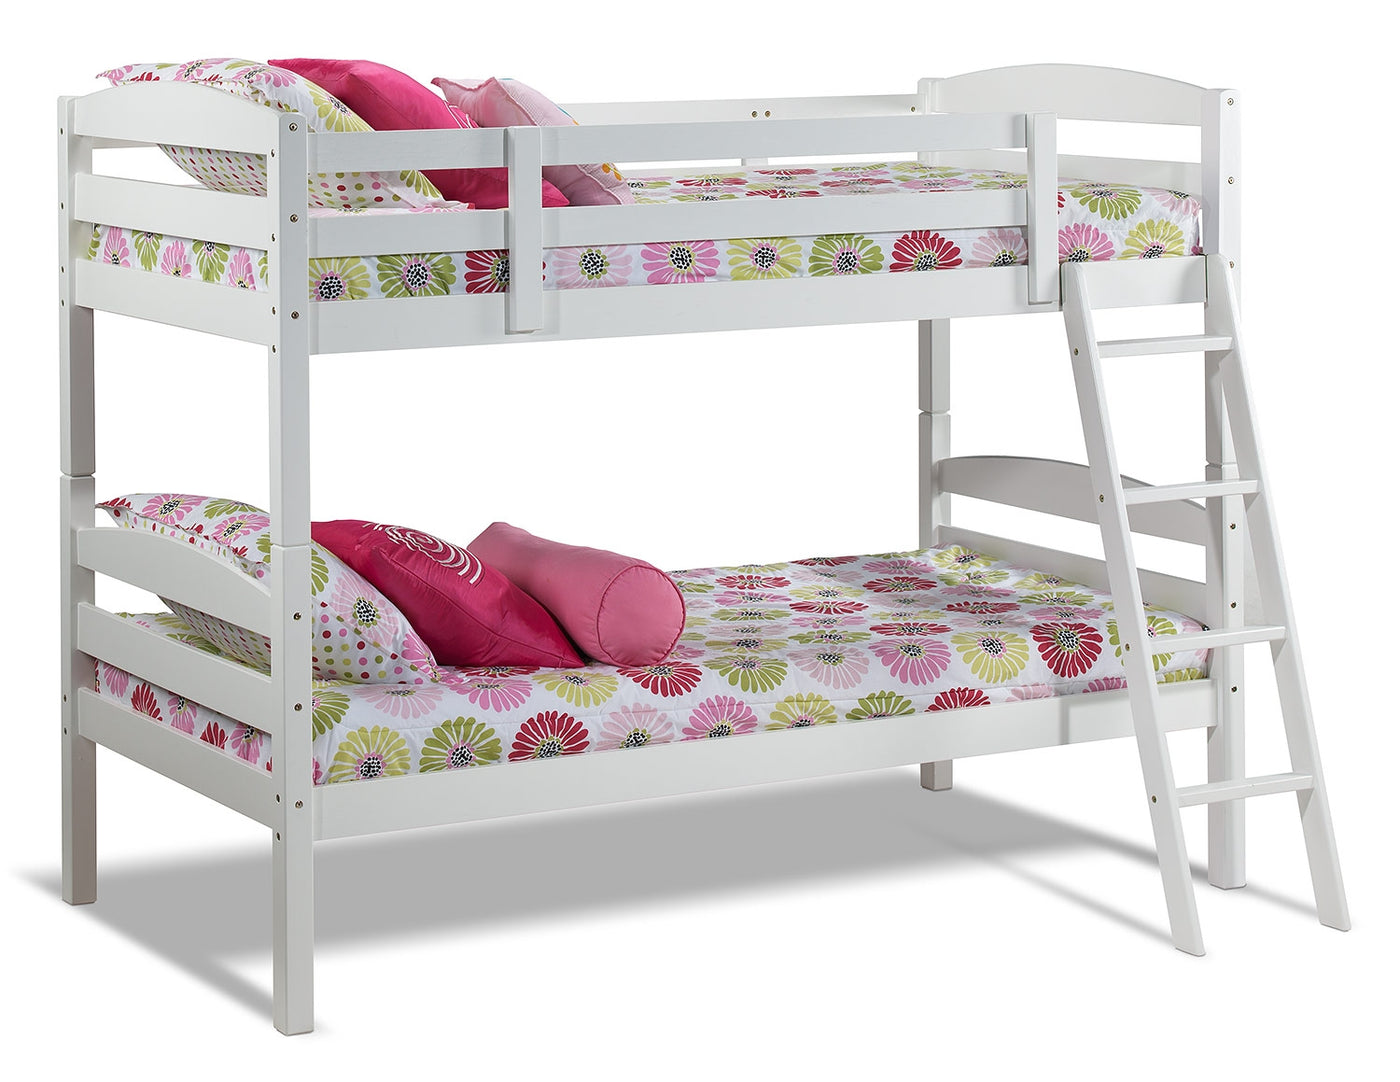 leon's furniture bunk beds